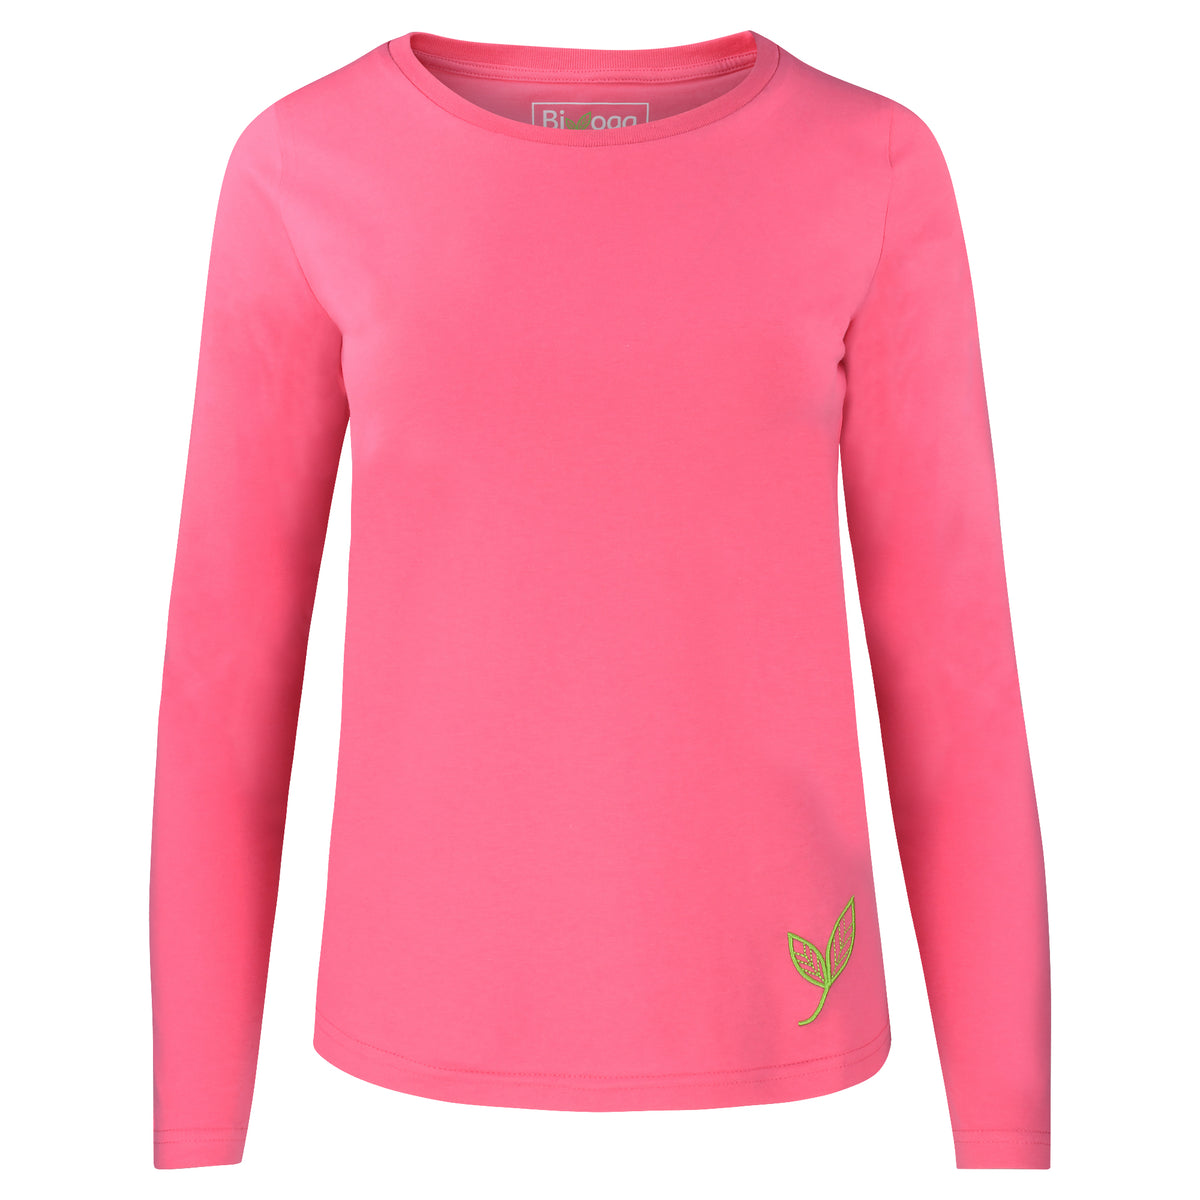 Damen Yoga Yoga BASIC – Shirt Shop Pink, XS-XL Premium Langarm GOTS-zertifiziert,